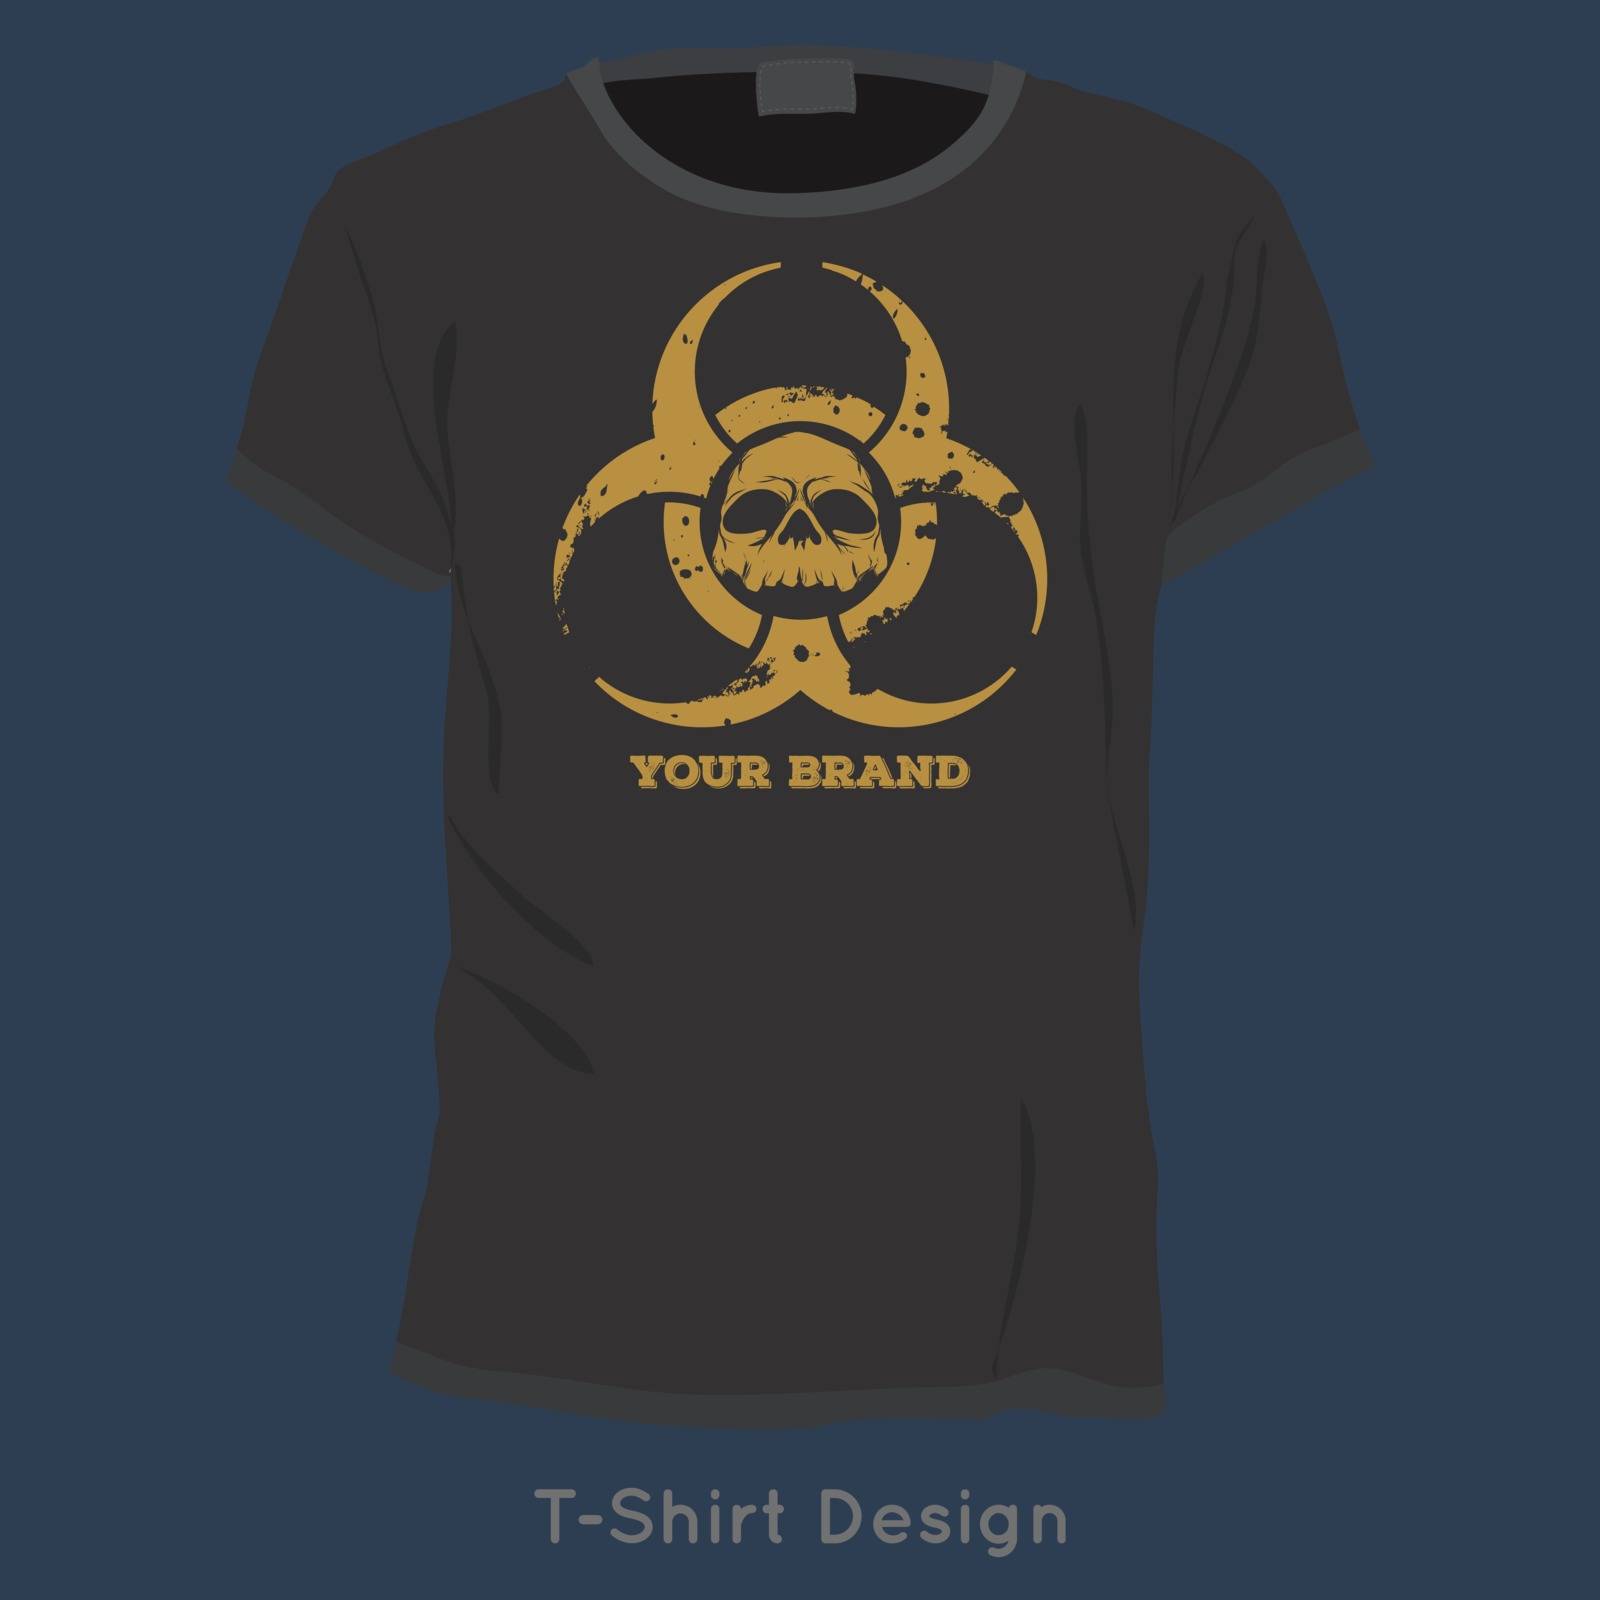 T-Shirt Design / Print Design by ilovecoffeedesign